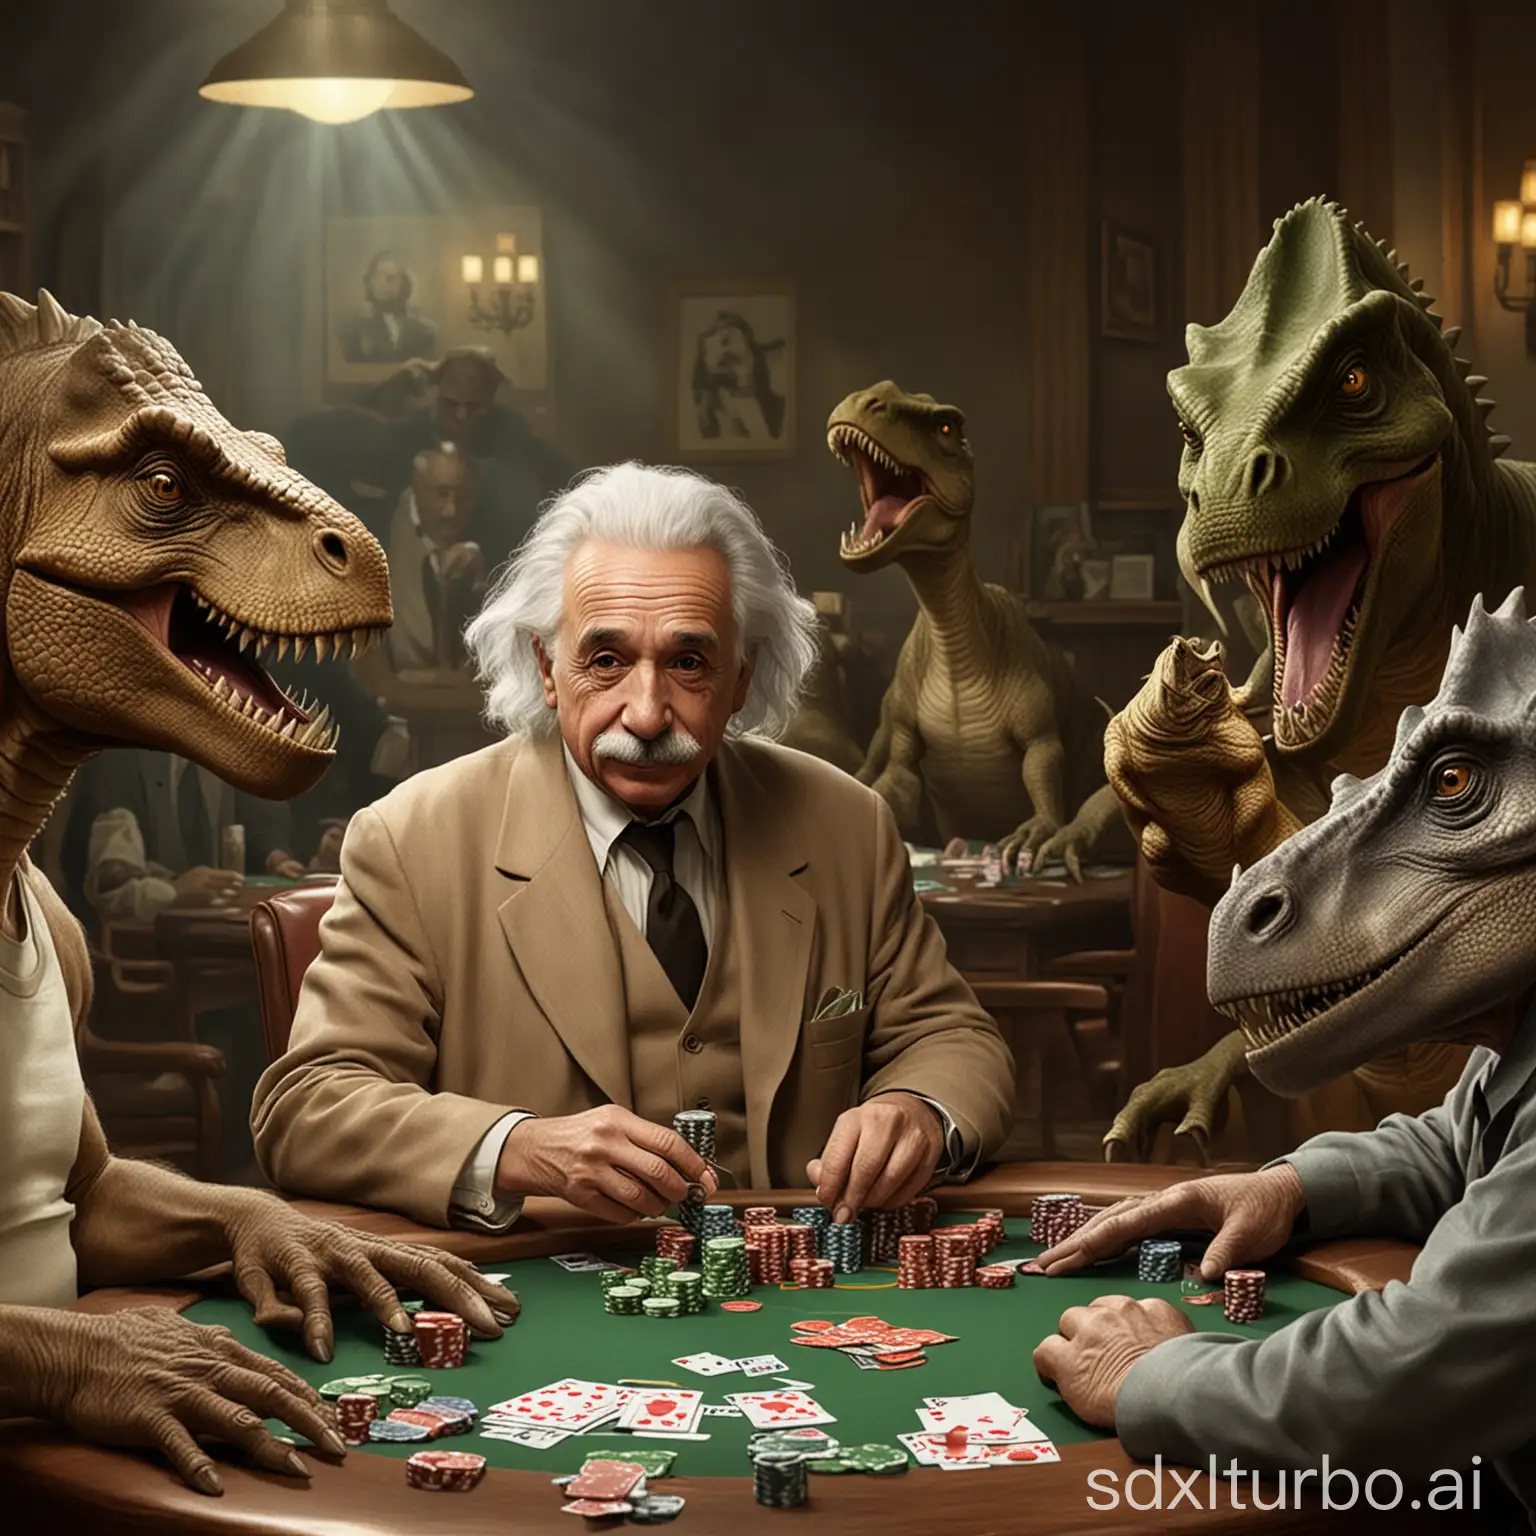 Albert-Einstein-Playing-Poker-with-Dinosaurs